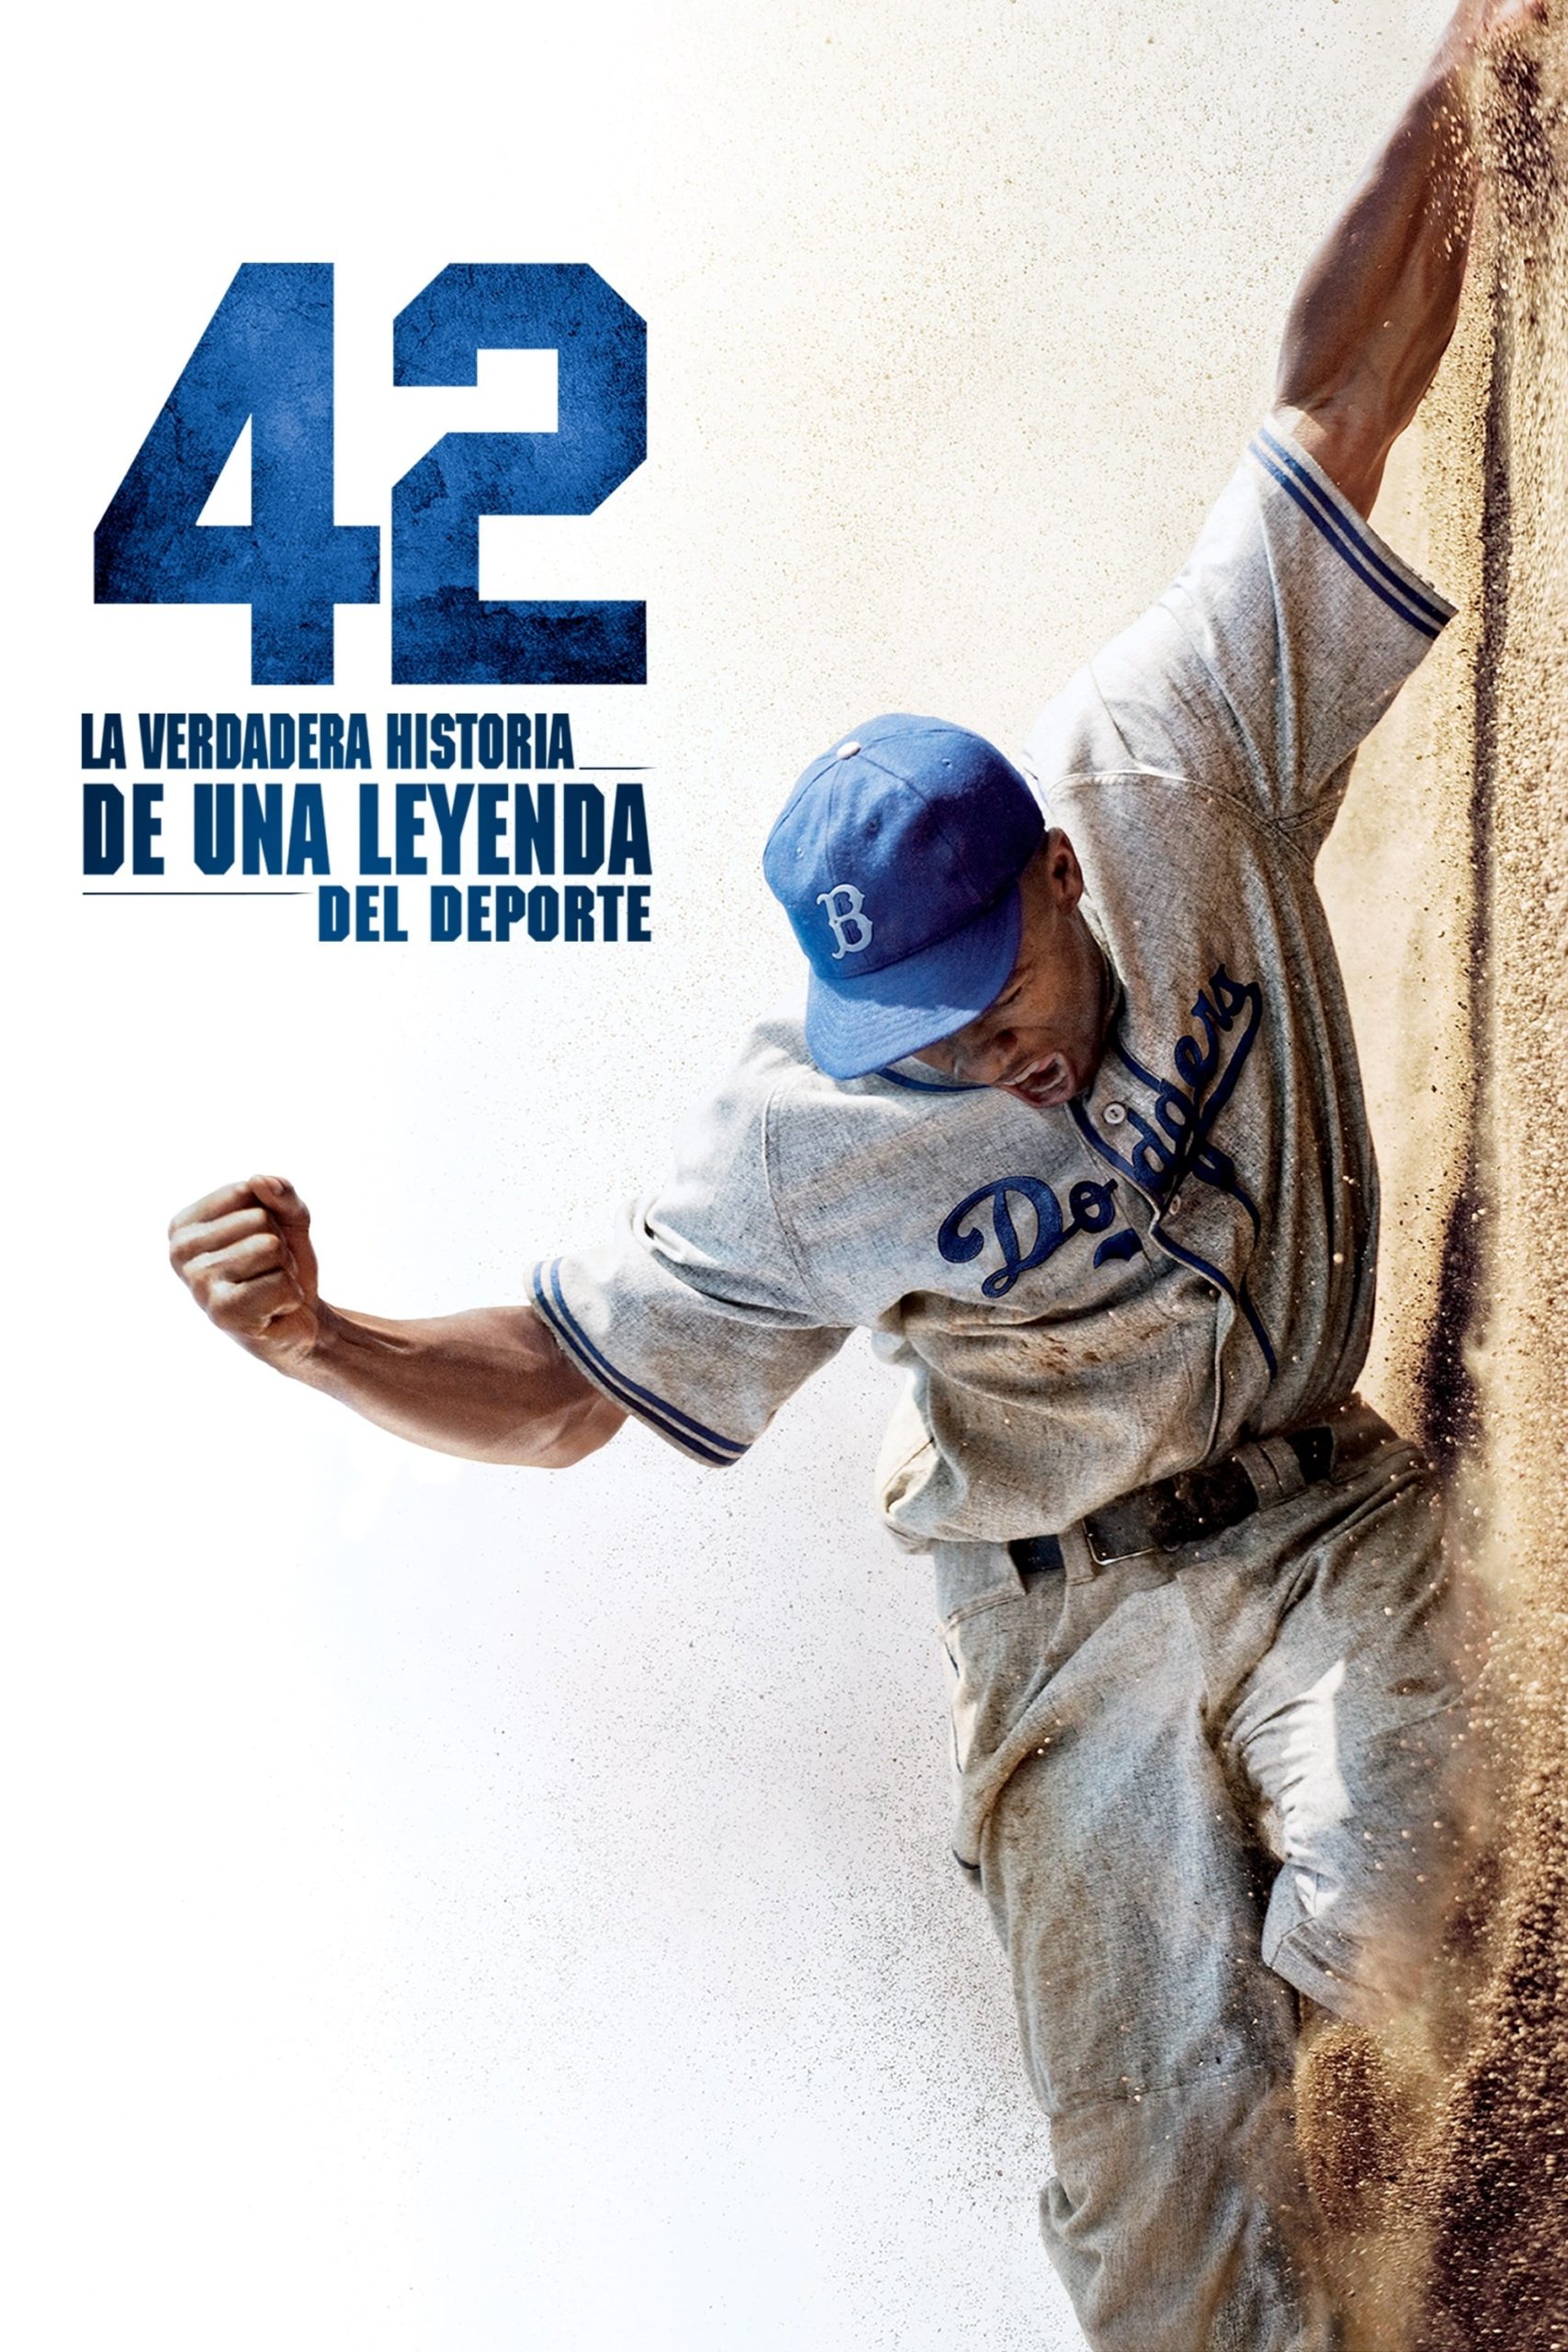 Poster de la película "42"